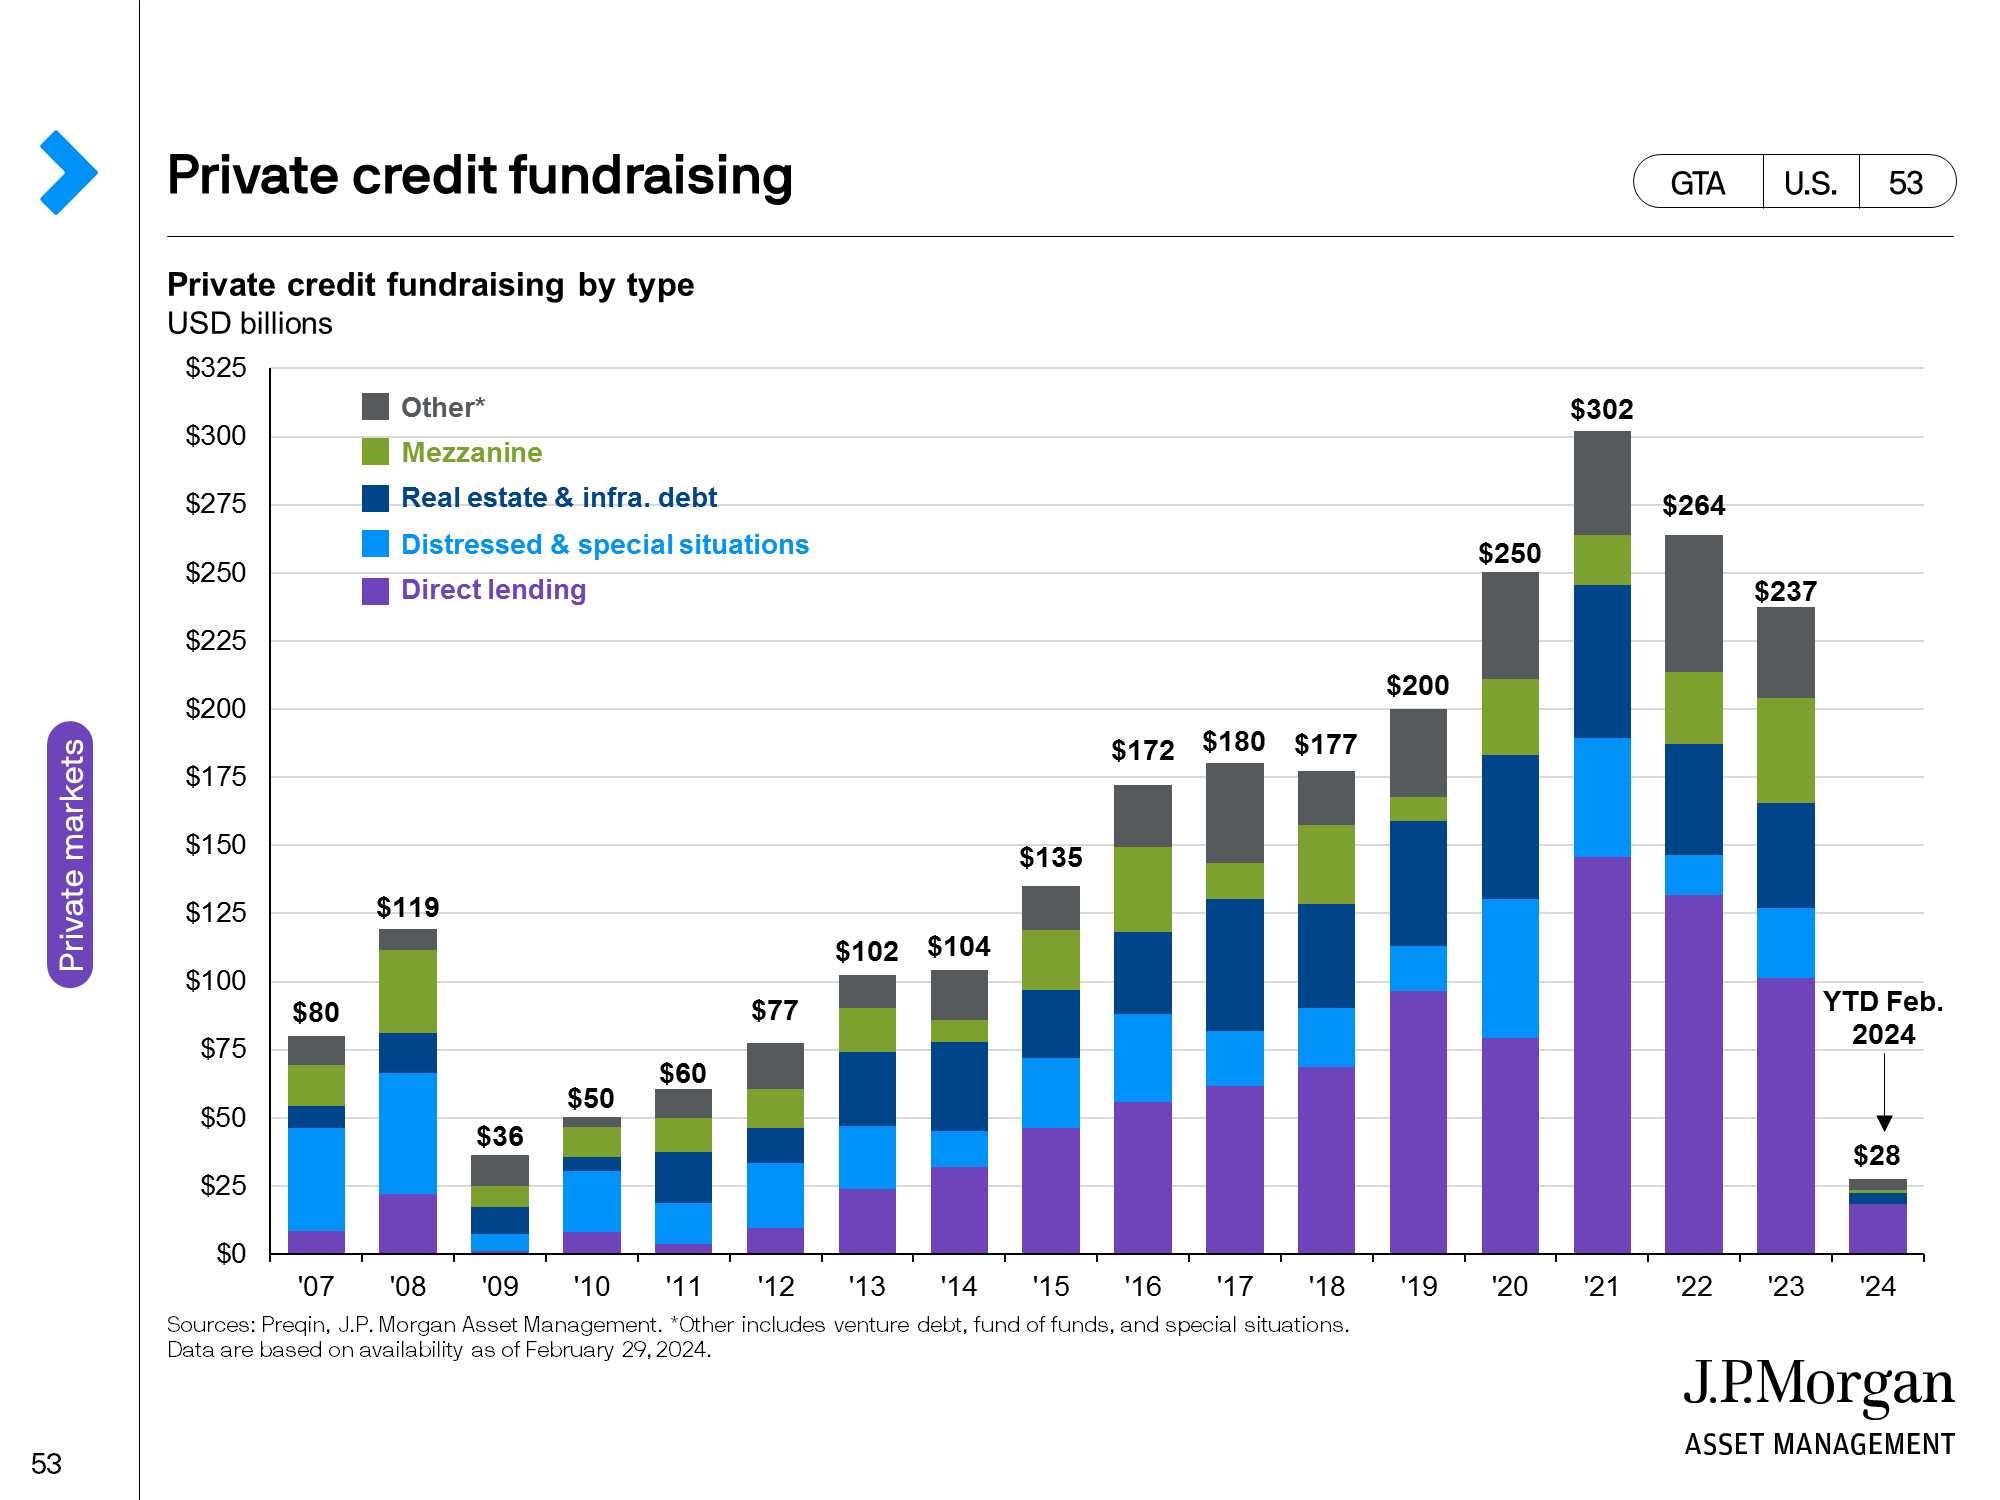 Sponsored versus non-sponsored leveraged loans